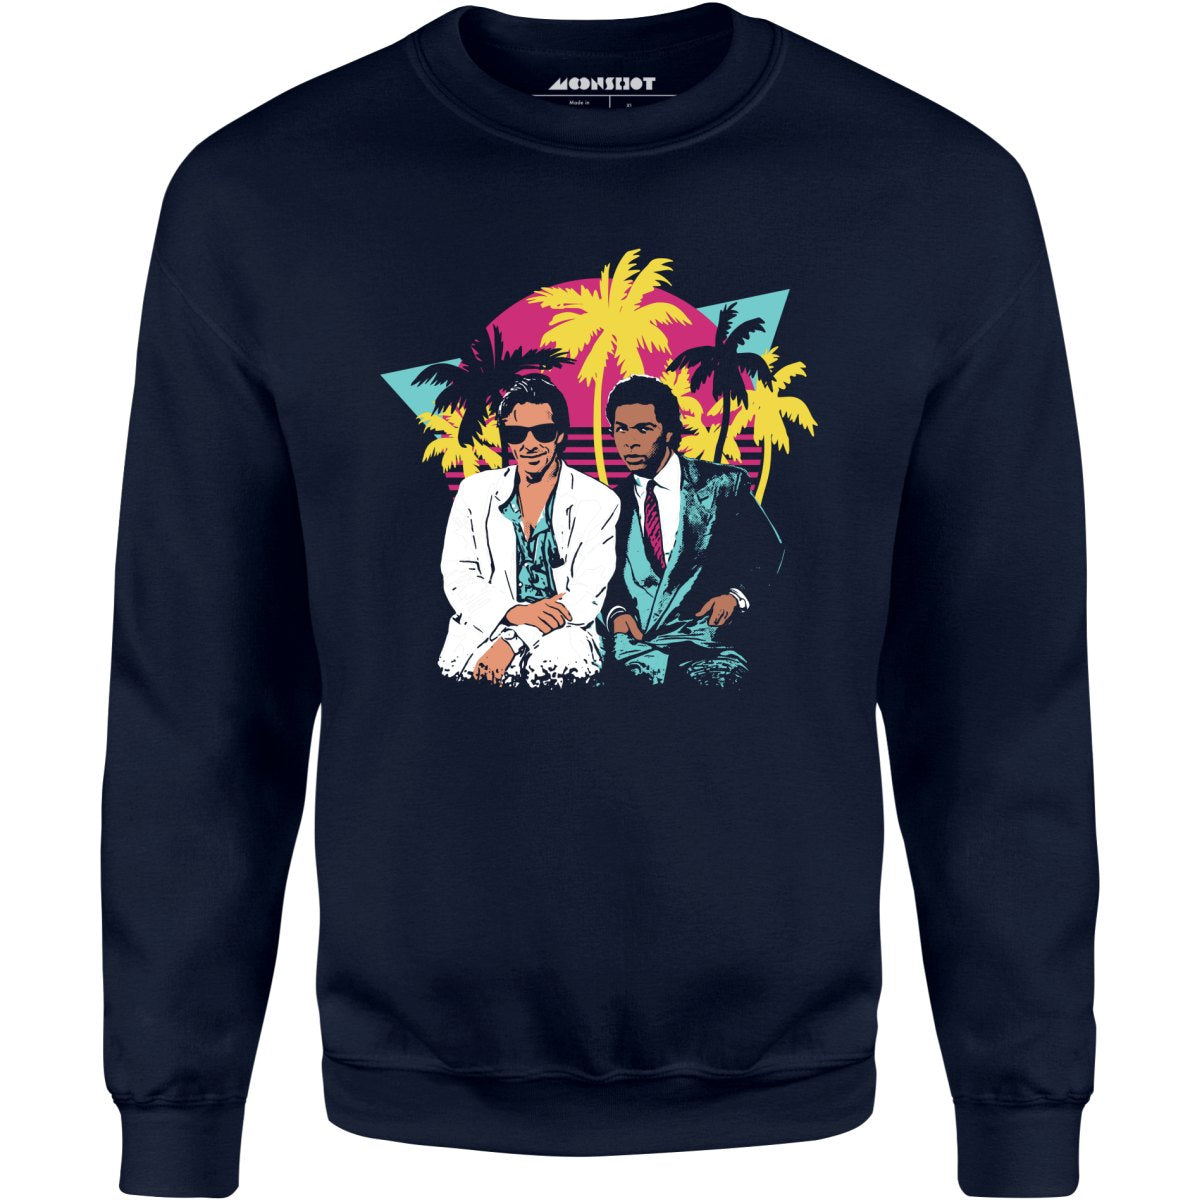 Crockett and Tubbs - Unisex Sweatshirt